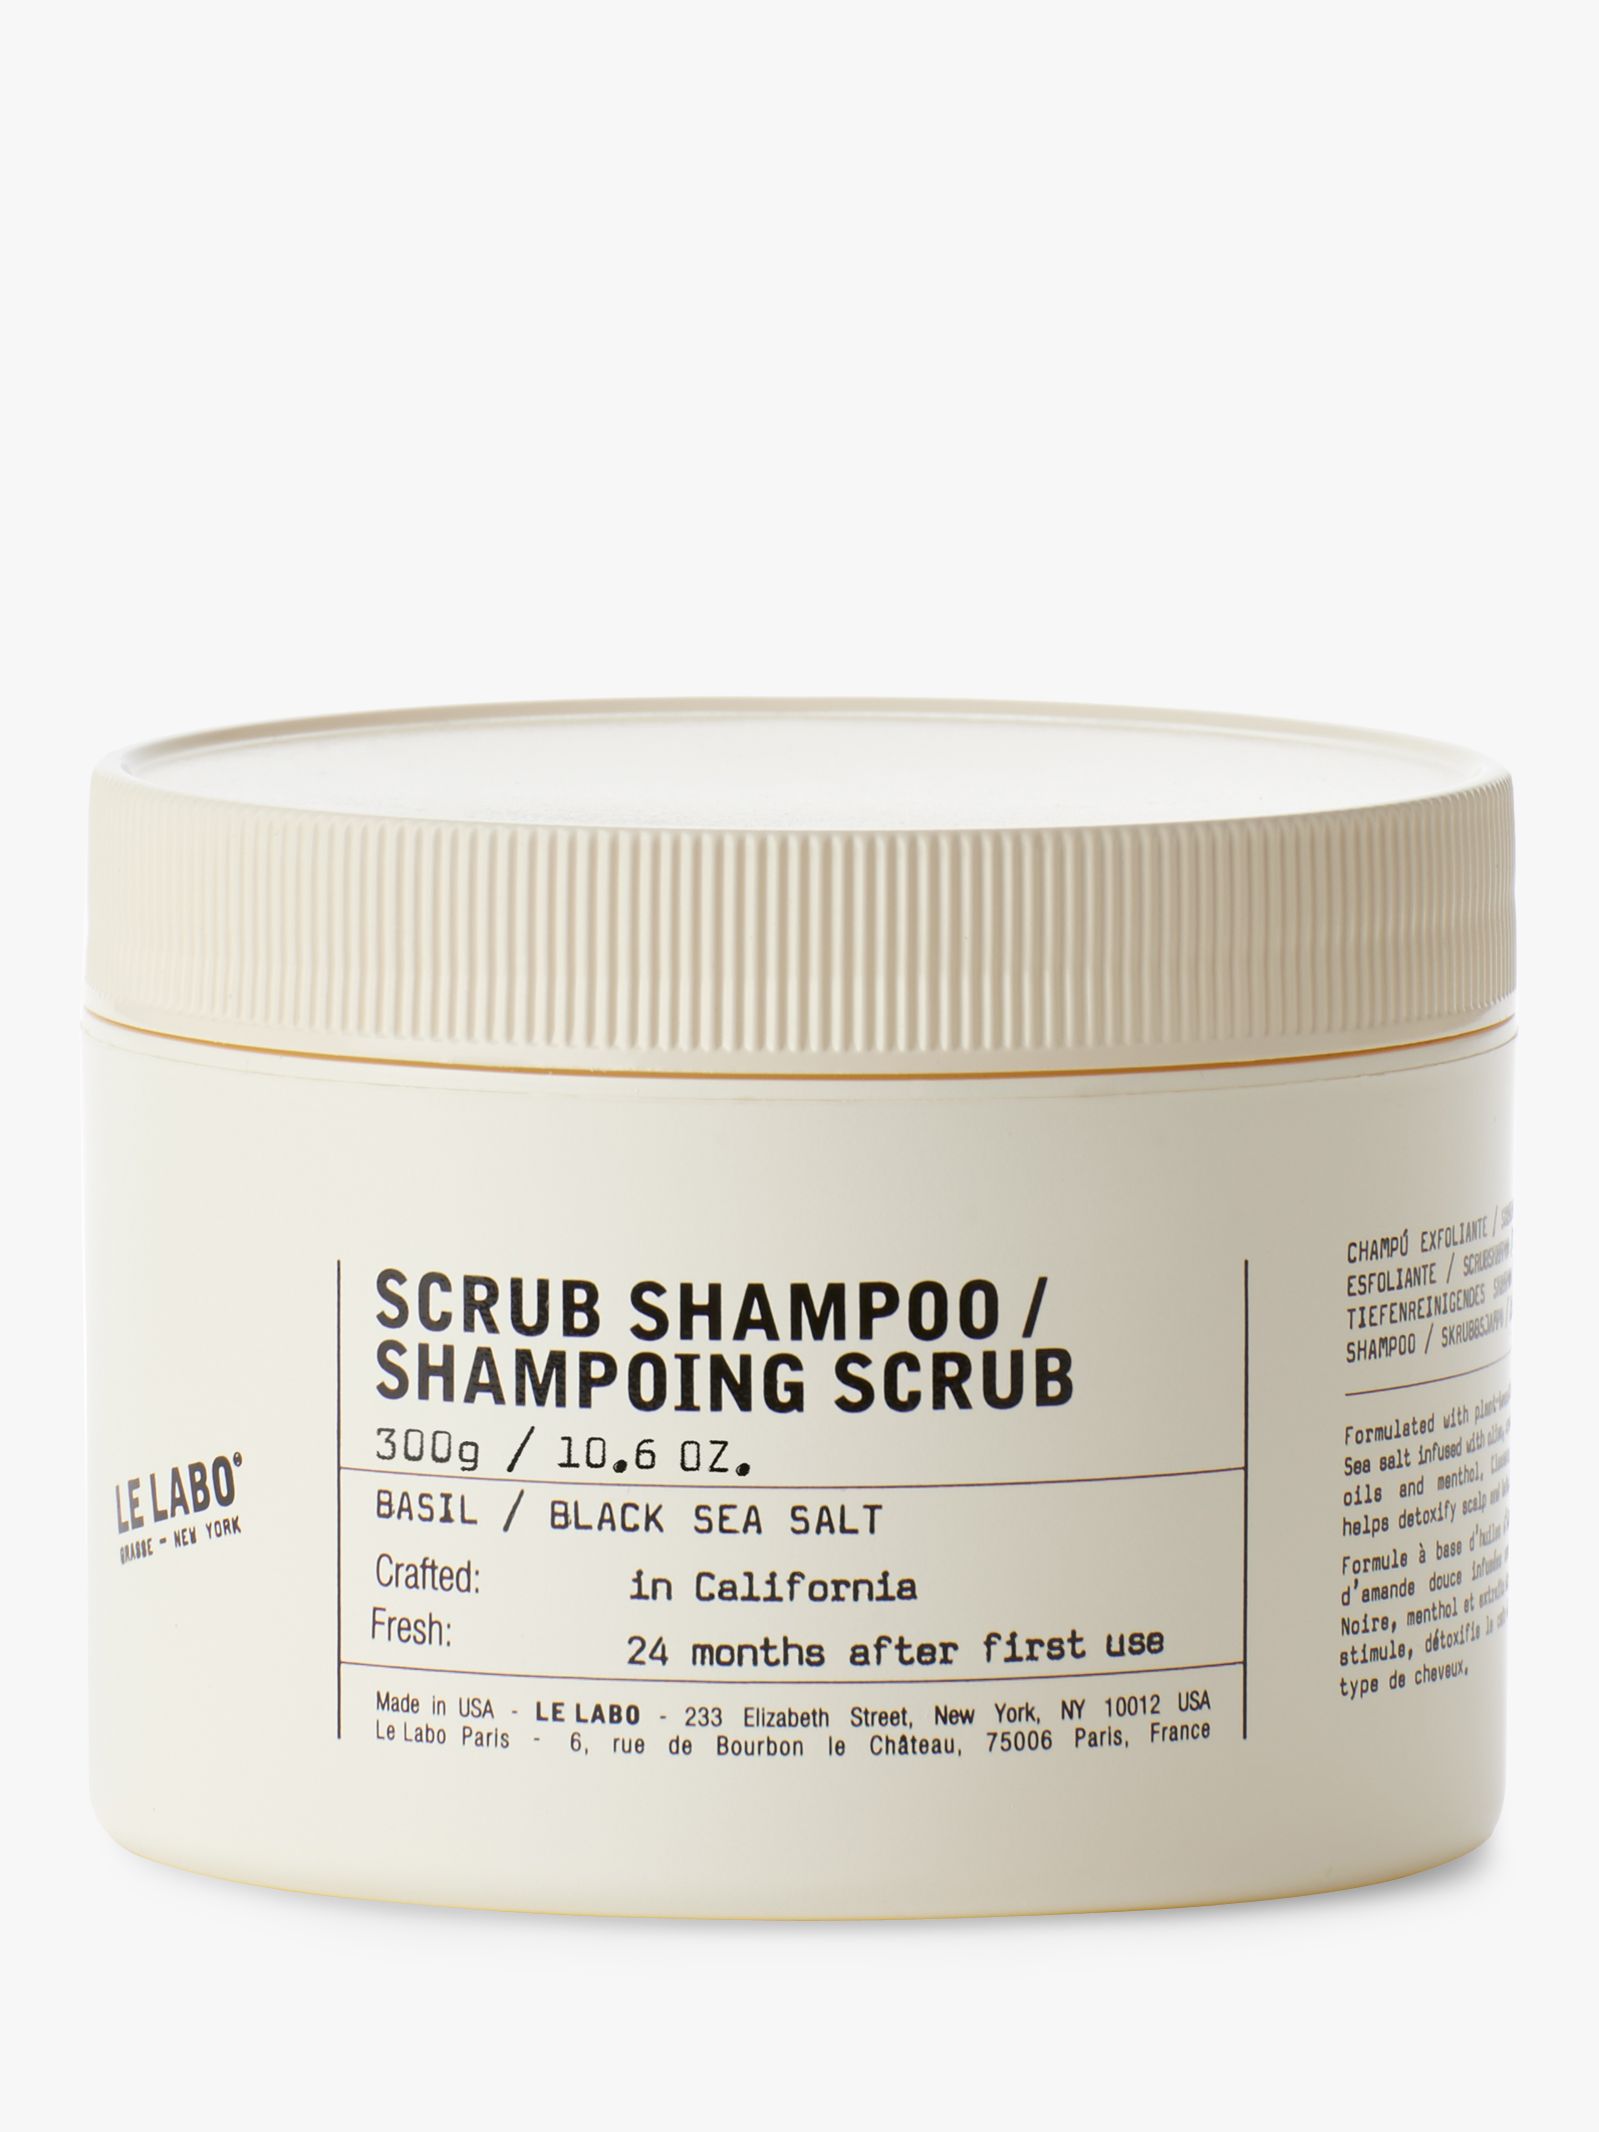 Le Labo Scrub Shampoo, 300g 1